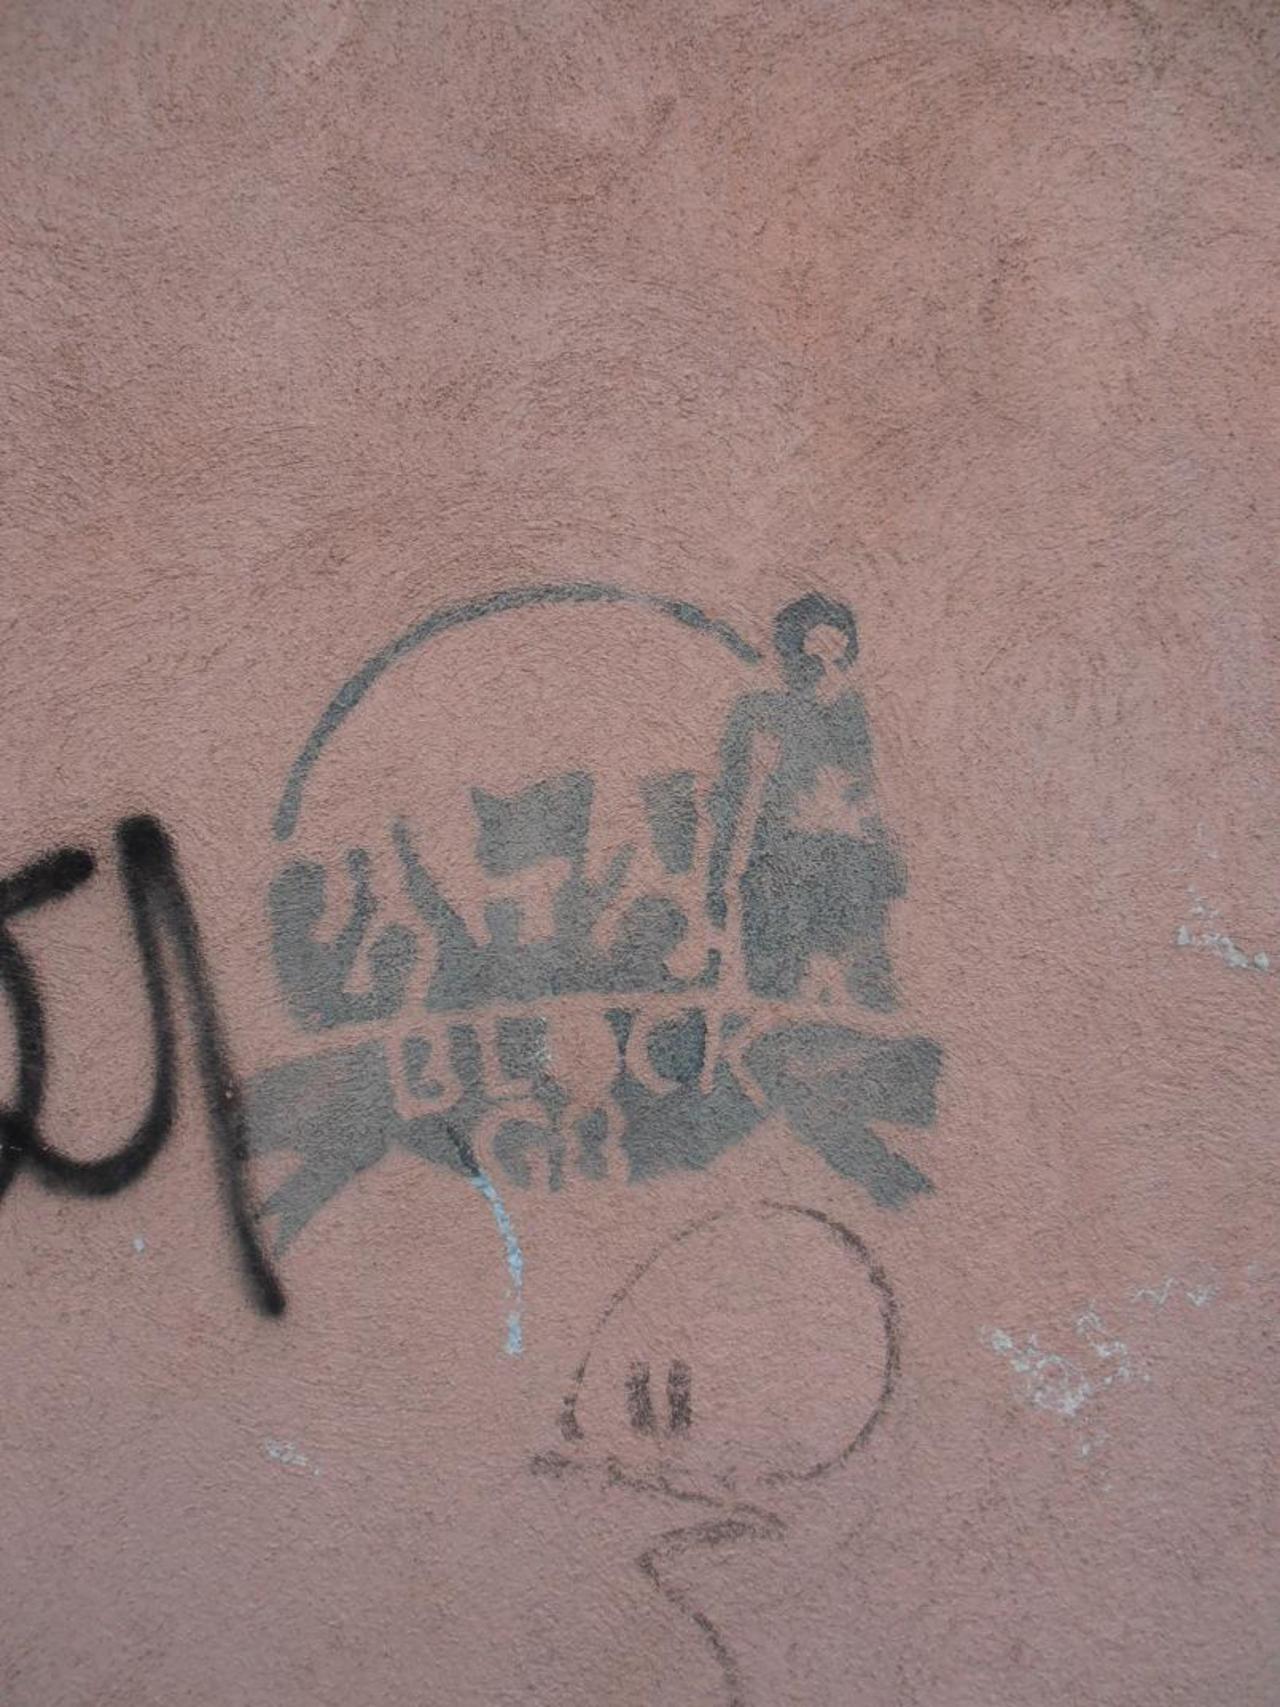 #graffiti #streetart #veniceitaly https://t.co/3Jry4FKniM